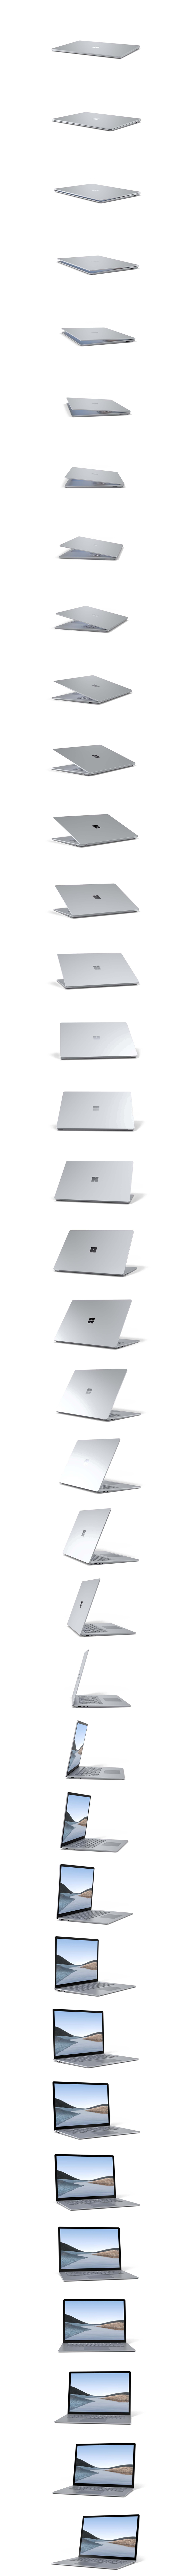 Surface Laptop 3 360度回転